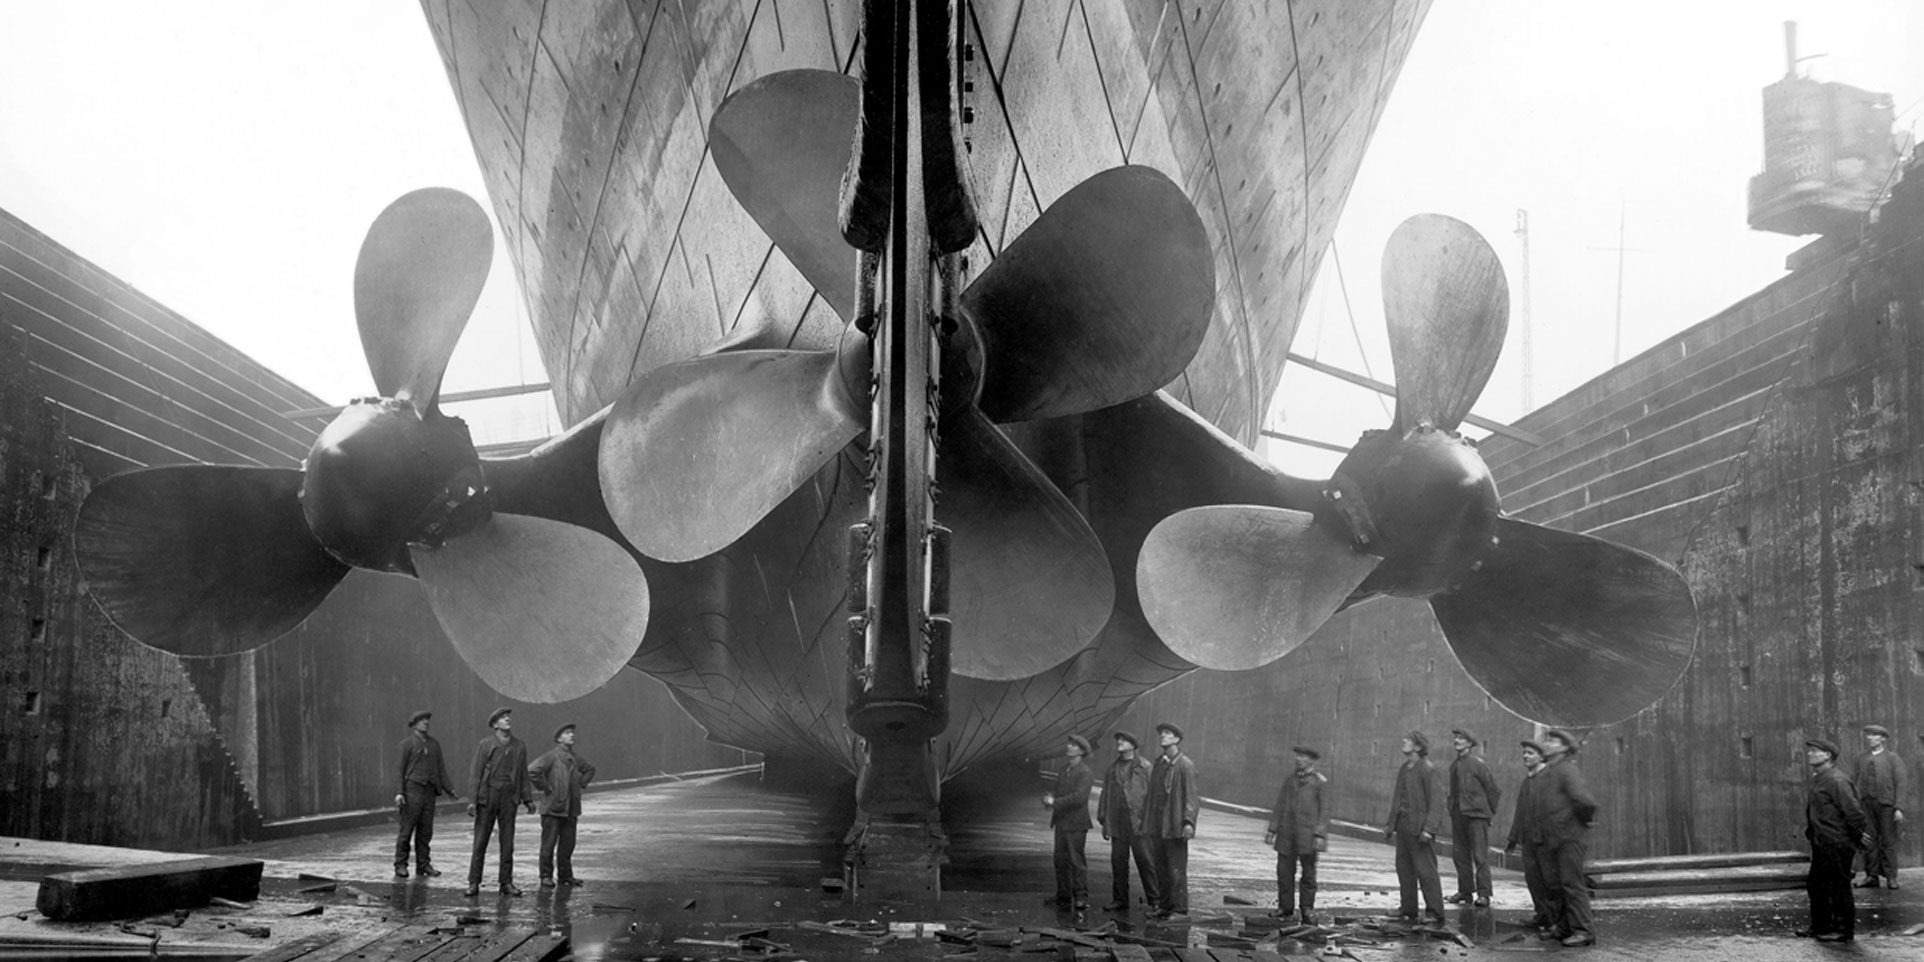 Titanic in dry dock c.1911